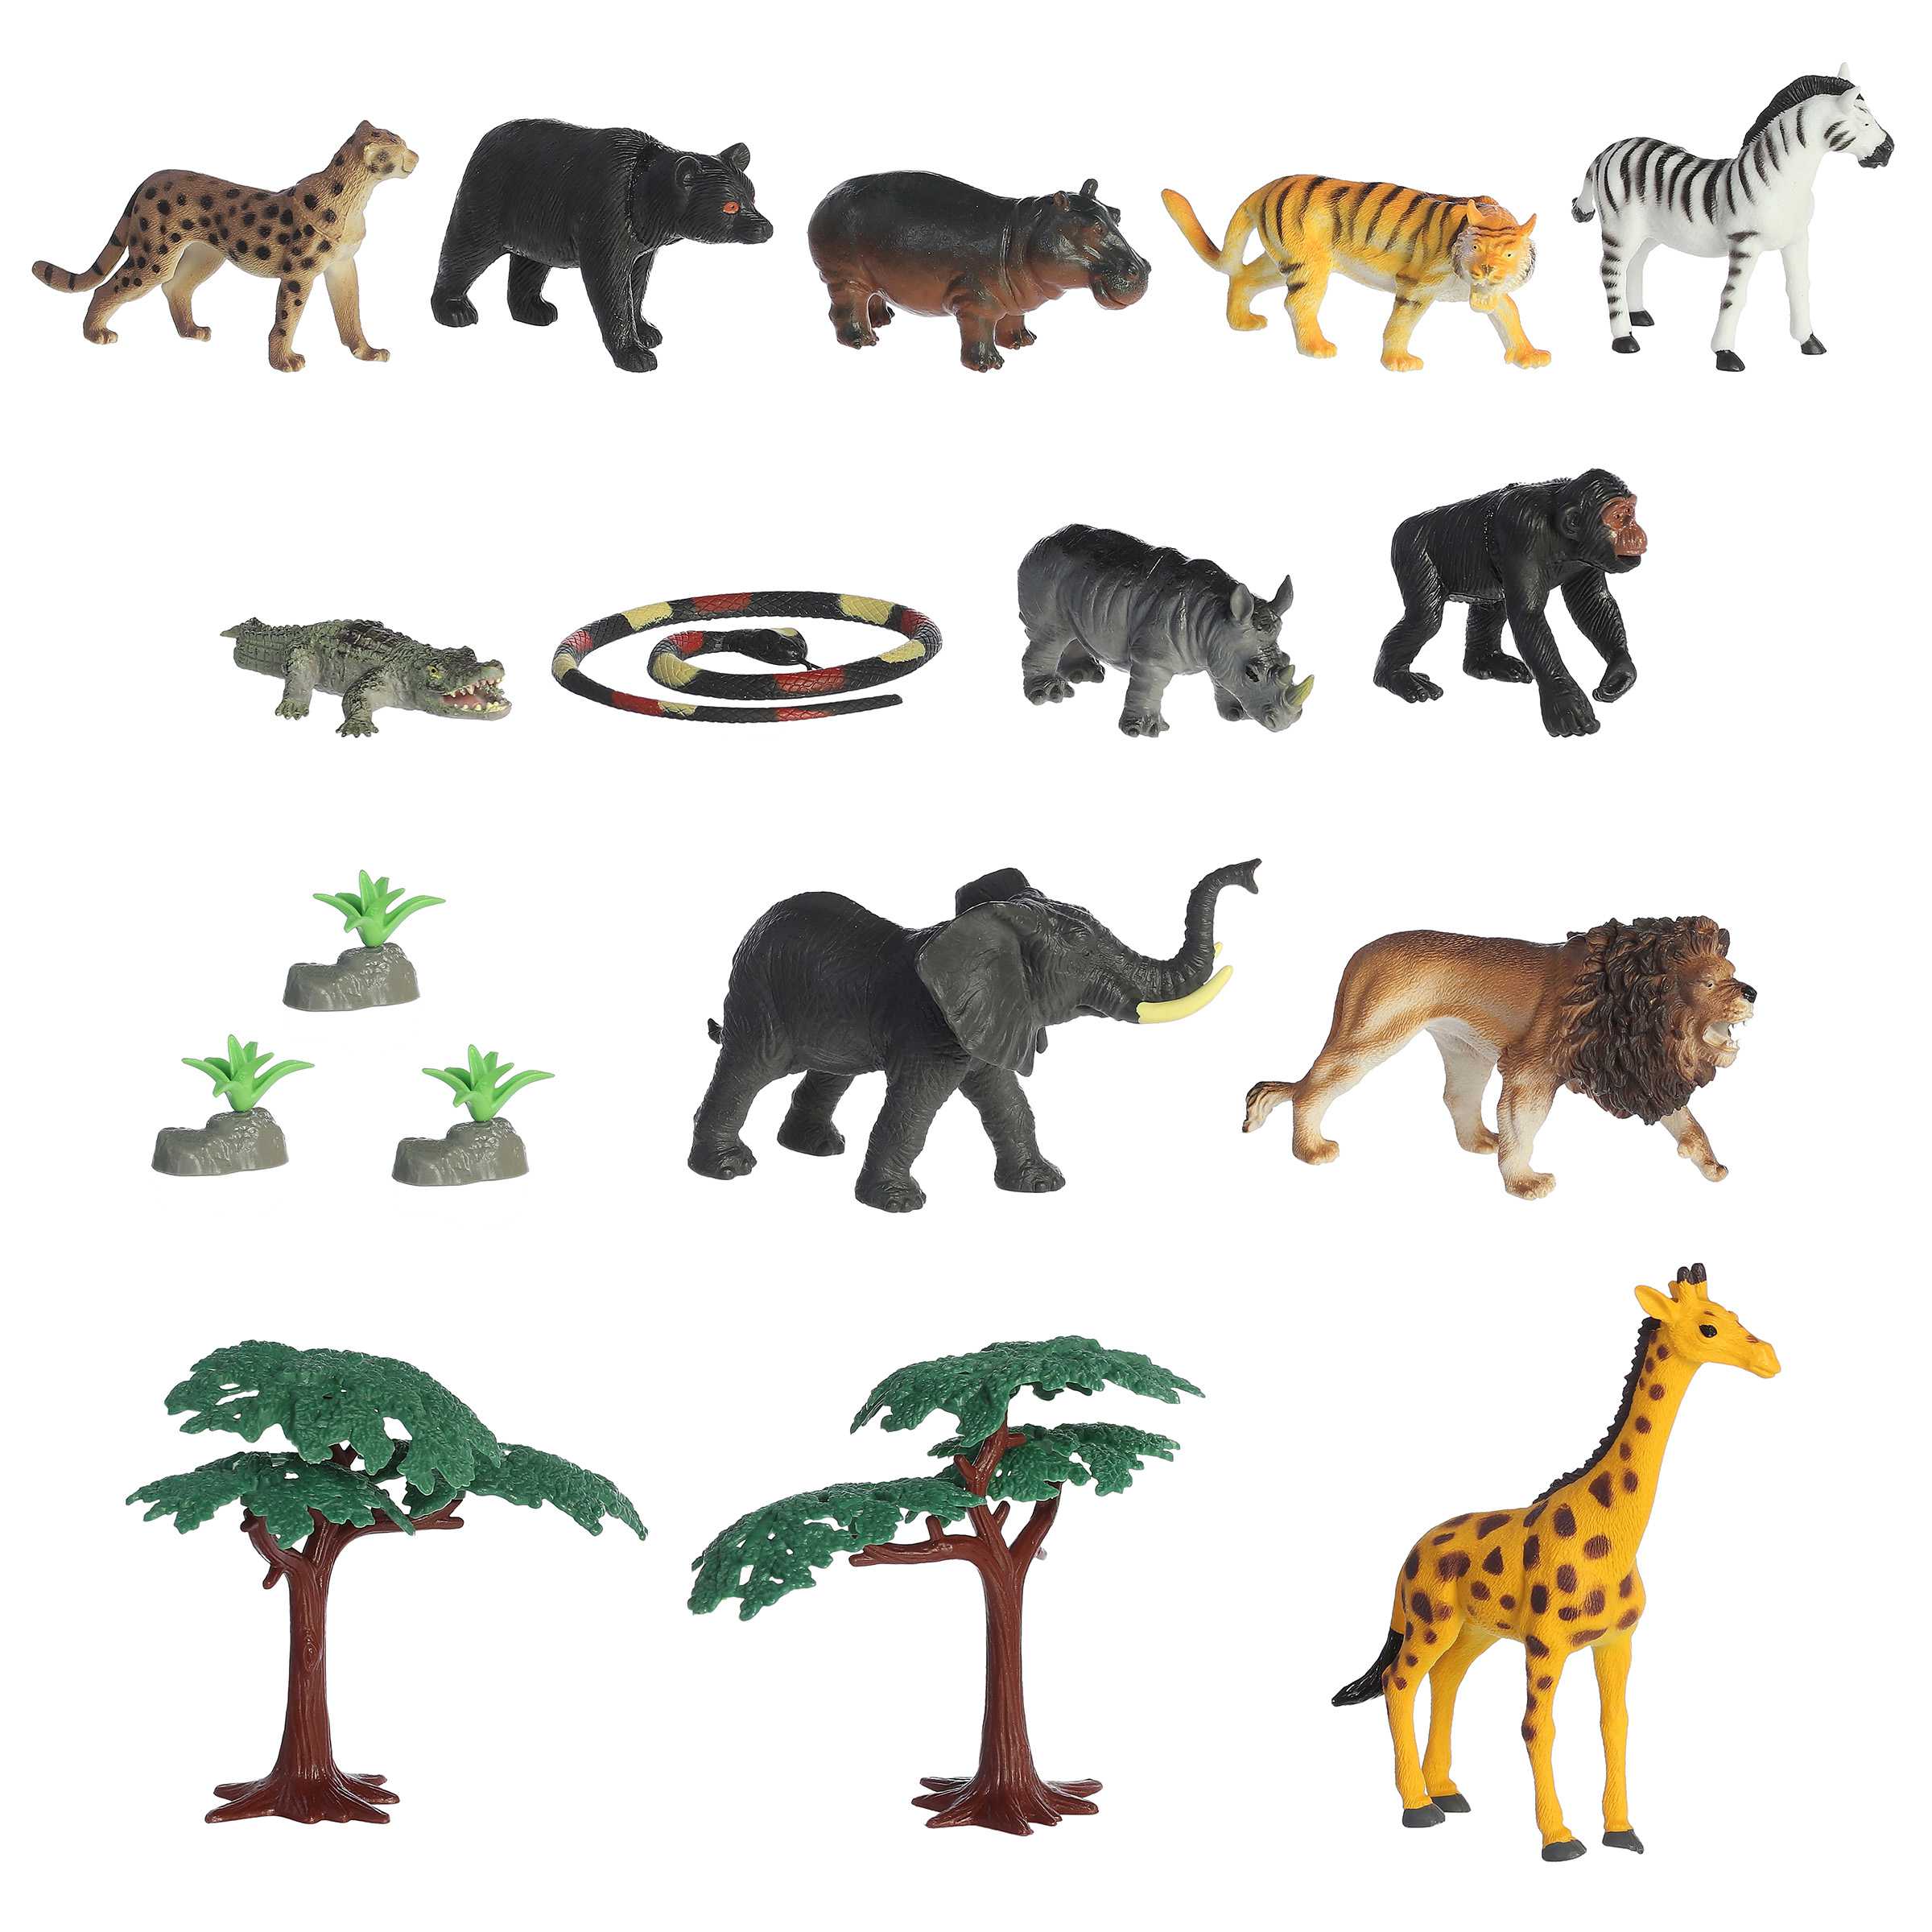 Mattel Pop Up Rainforest Safari Game